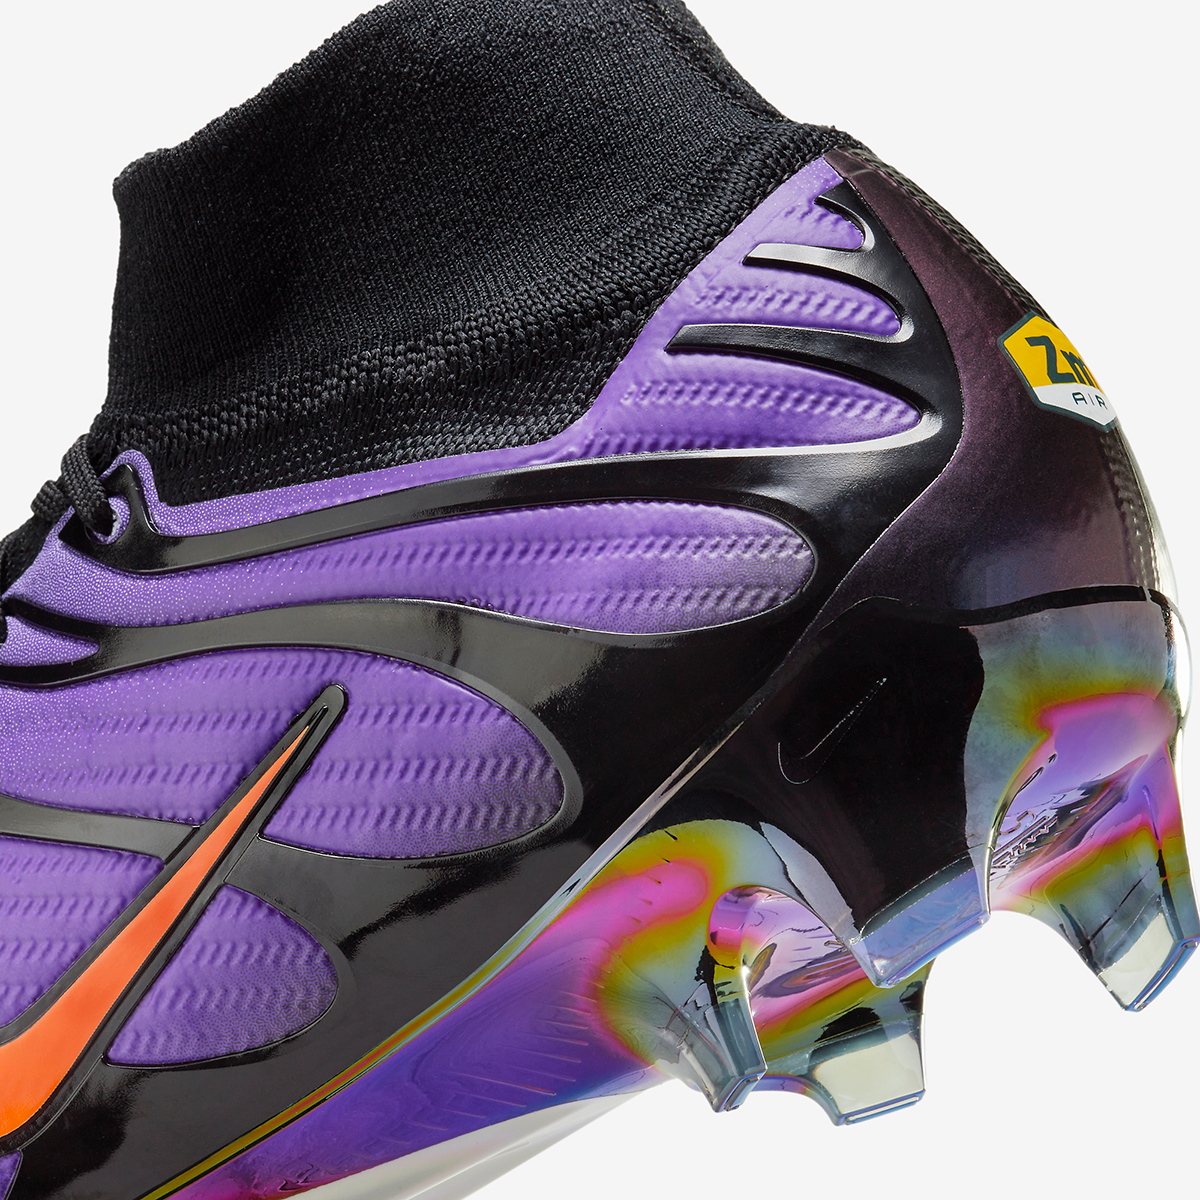 Nike Mercurial Tn Football Boots Voltage Purple Fv4553 500 11